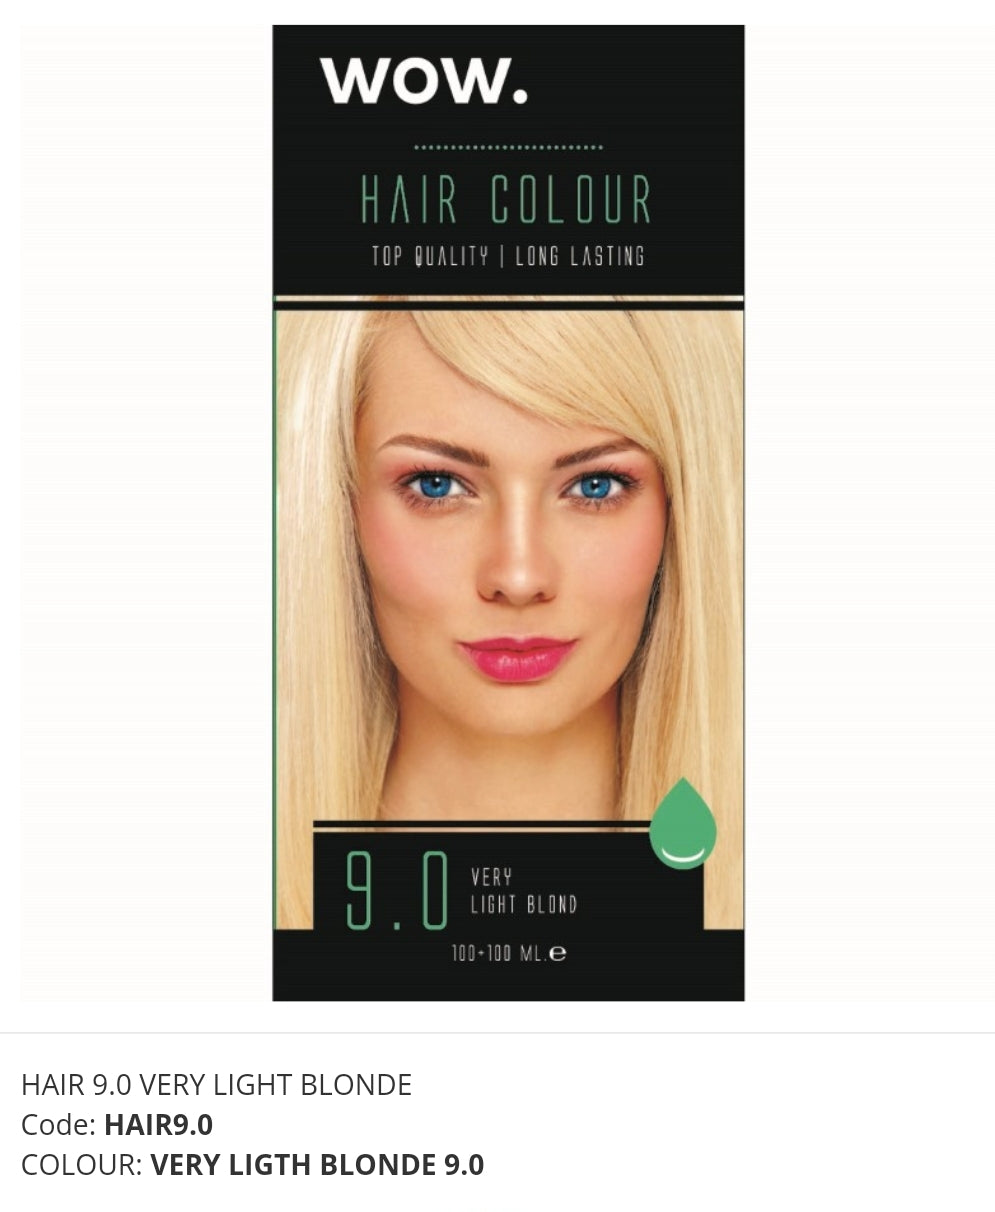 Wow Hair Colour 9.0 very light blonde